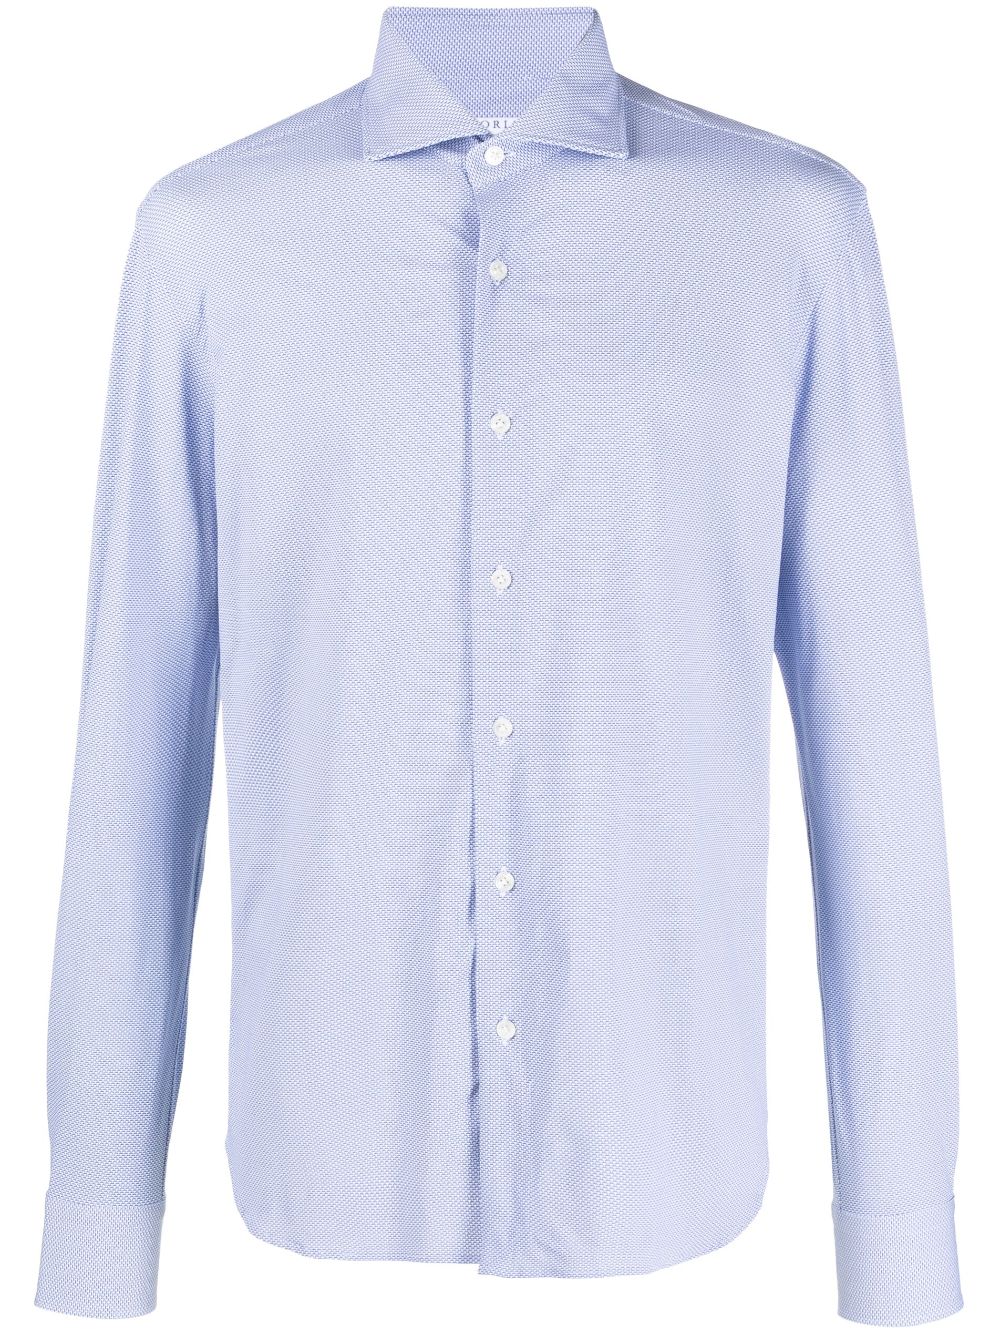 long-sleeve spread-collar shirt